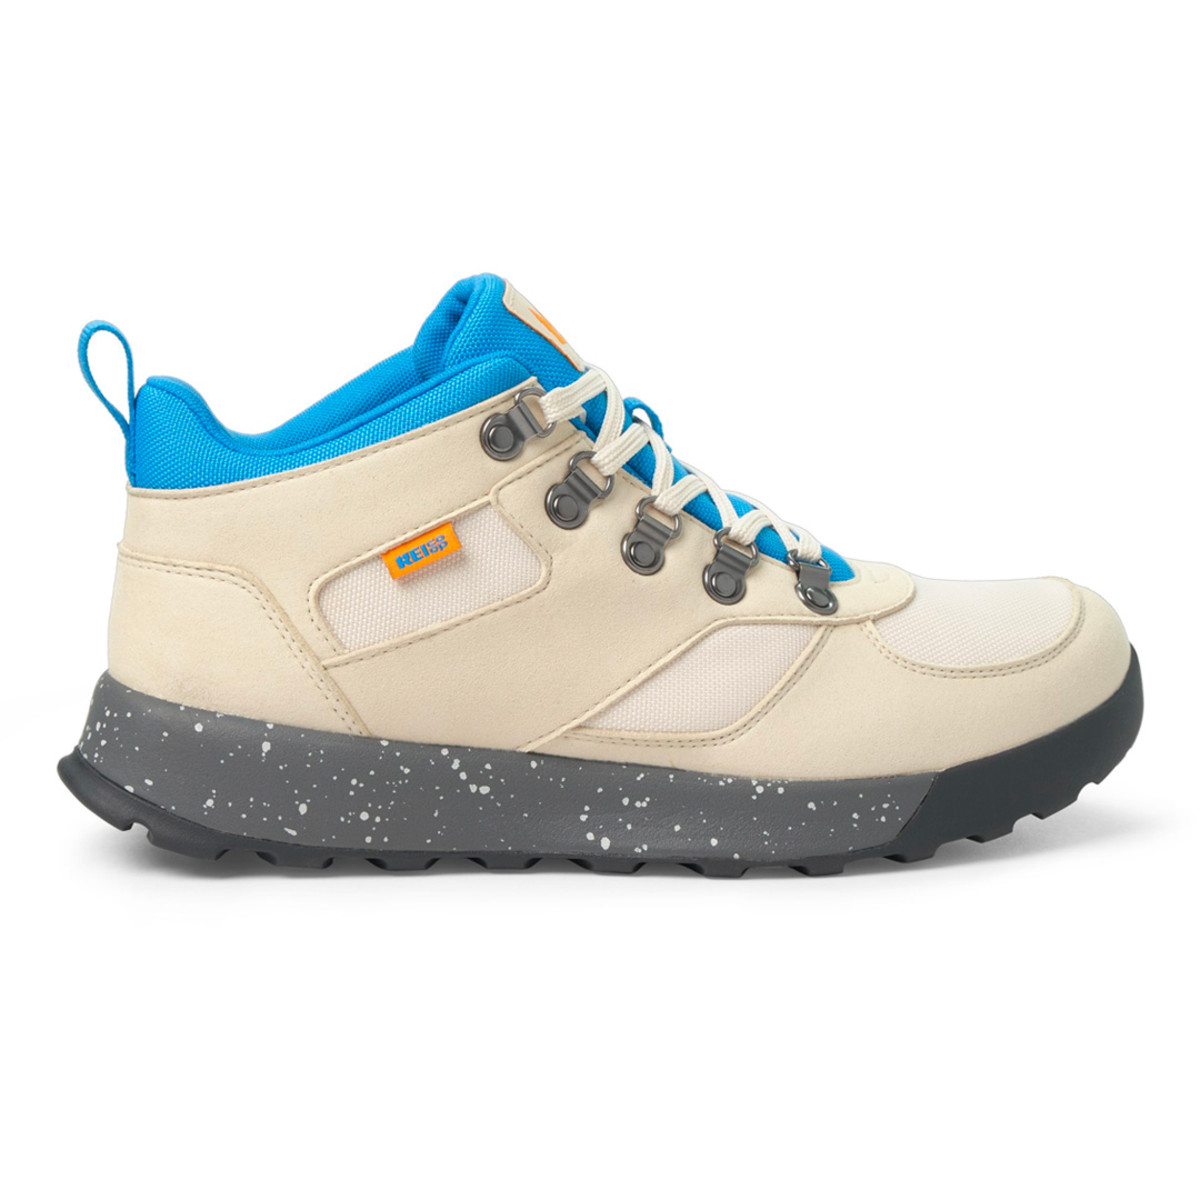 Rei Hiking Boots Sale Discount | bellvalefarms.com